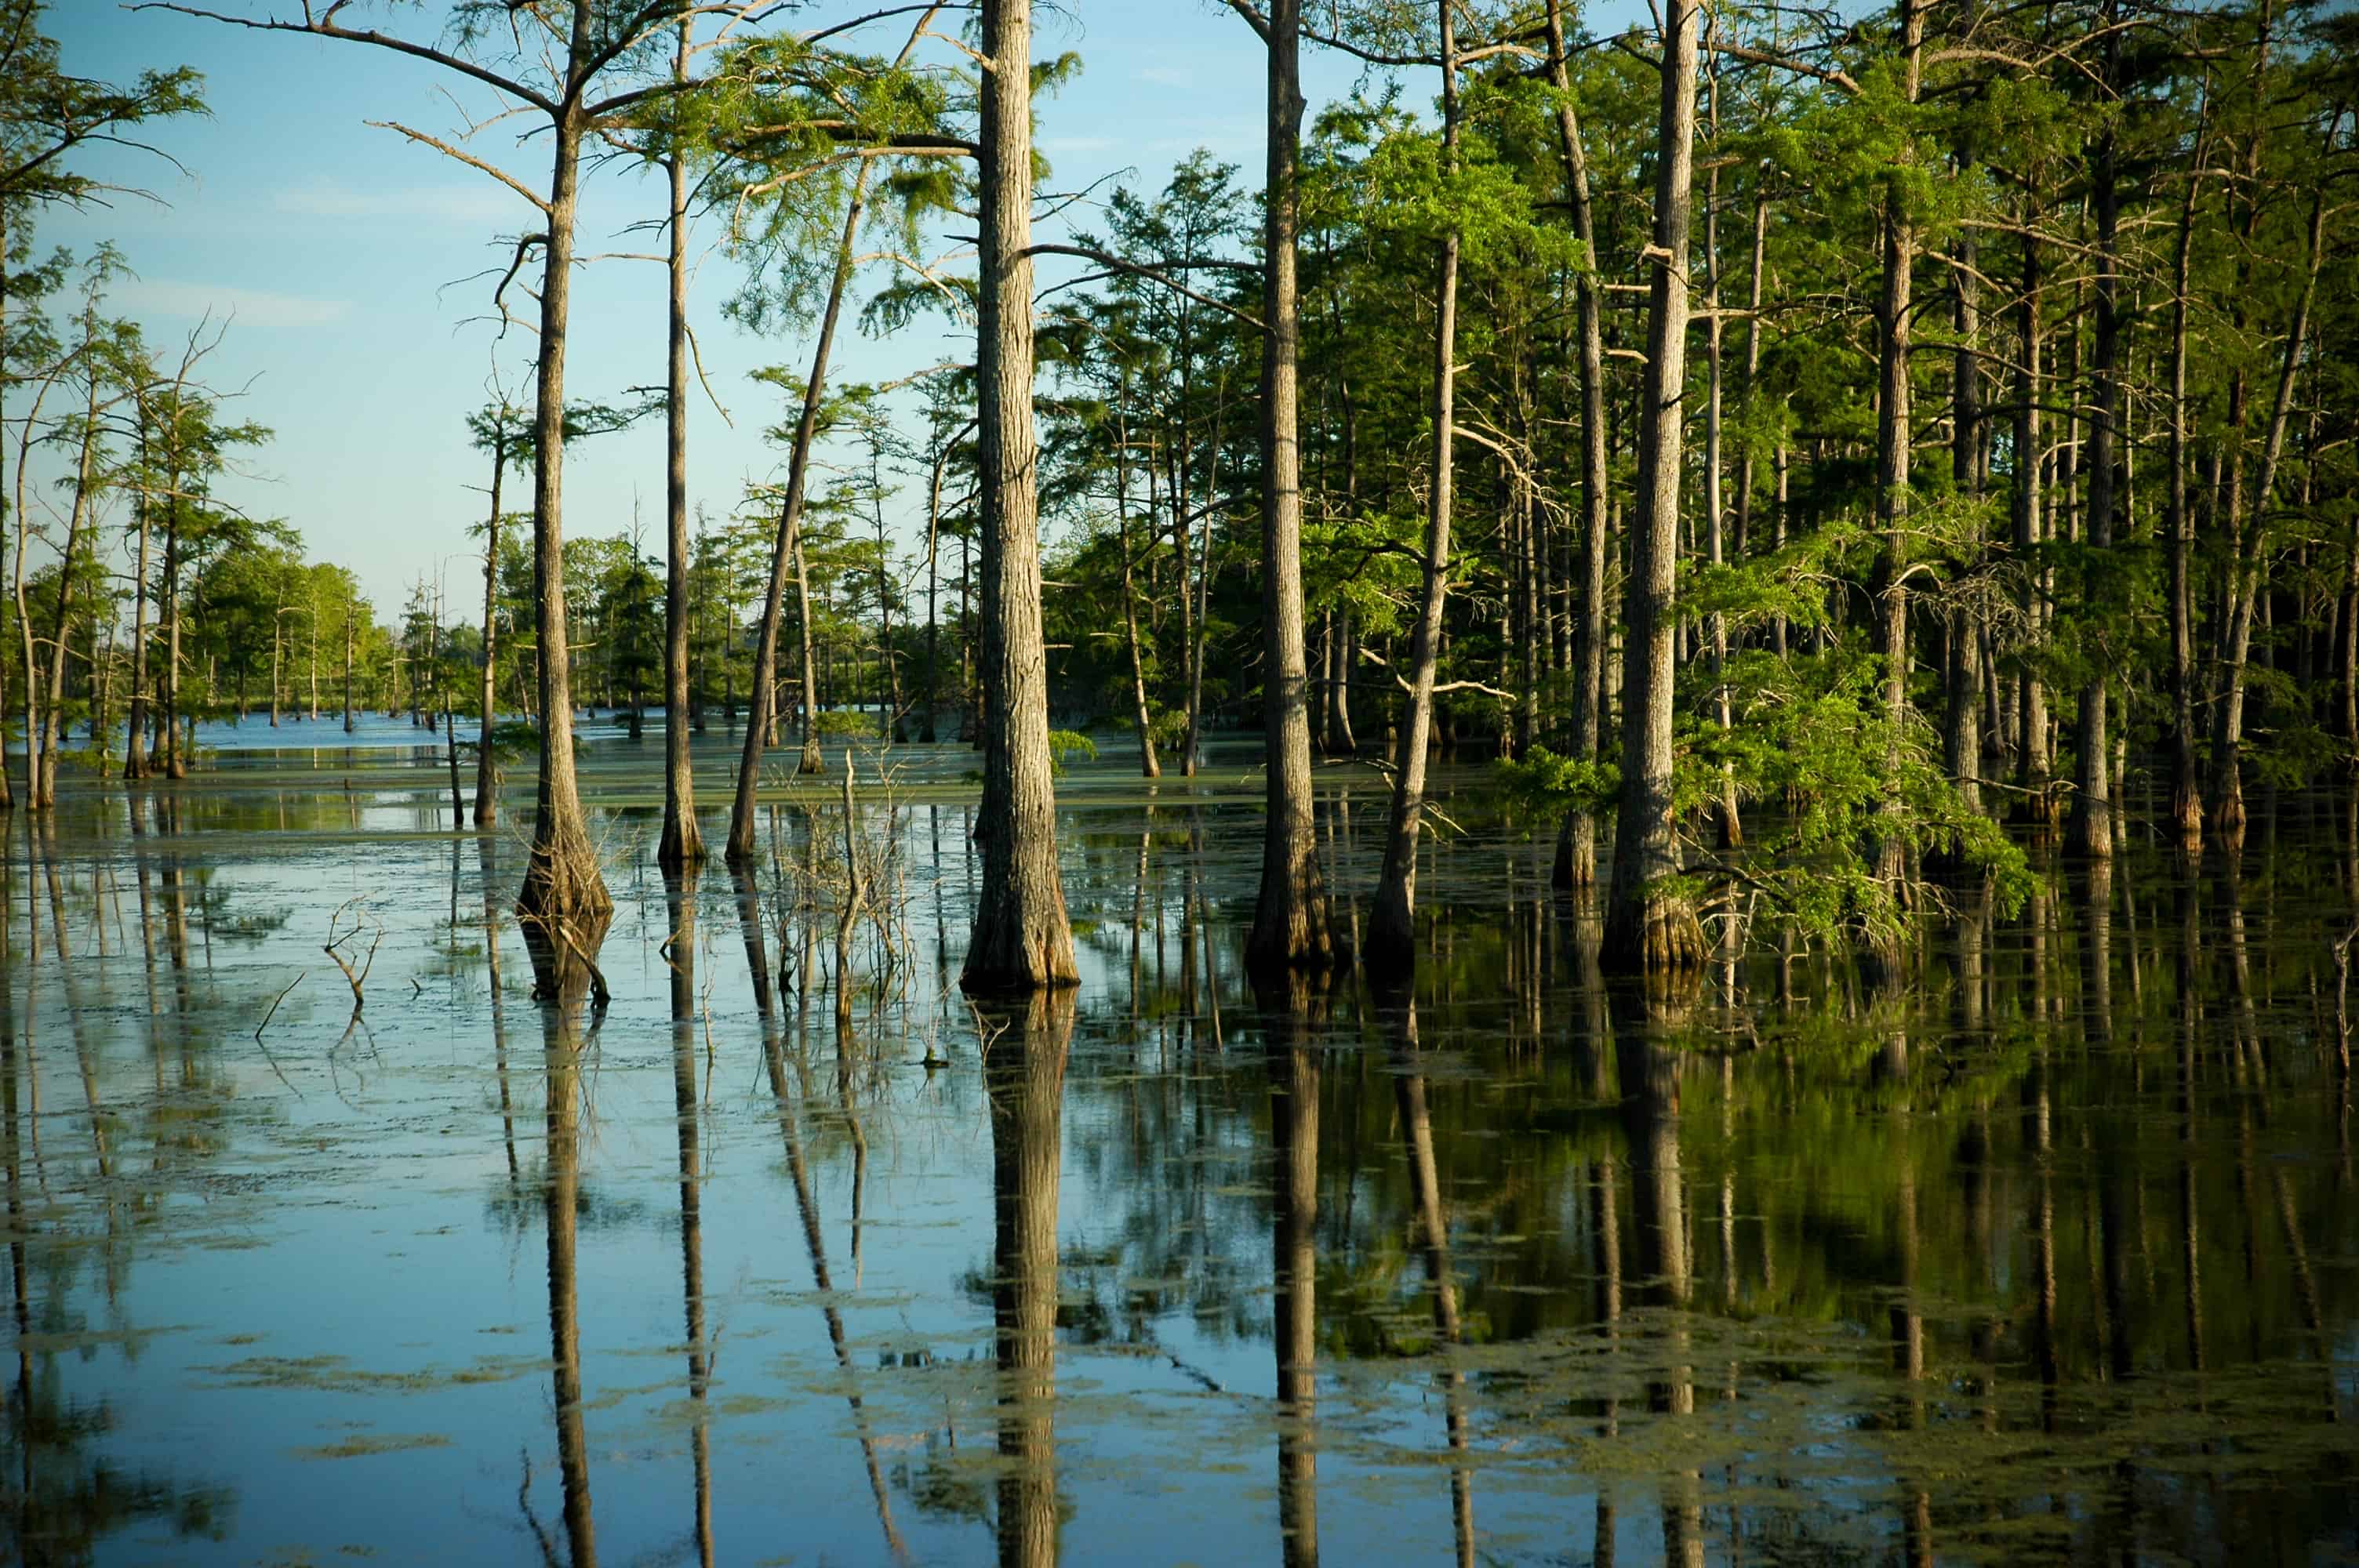 Louisiana Swamp (image: Michael McCarthy via Flickr)